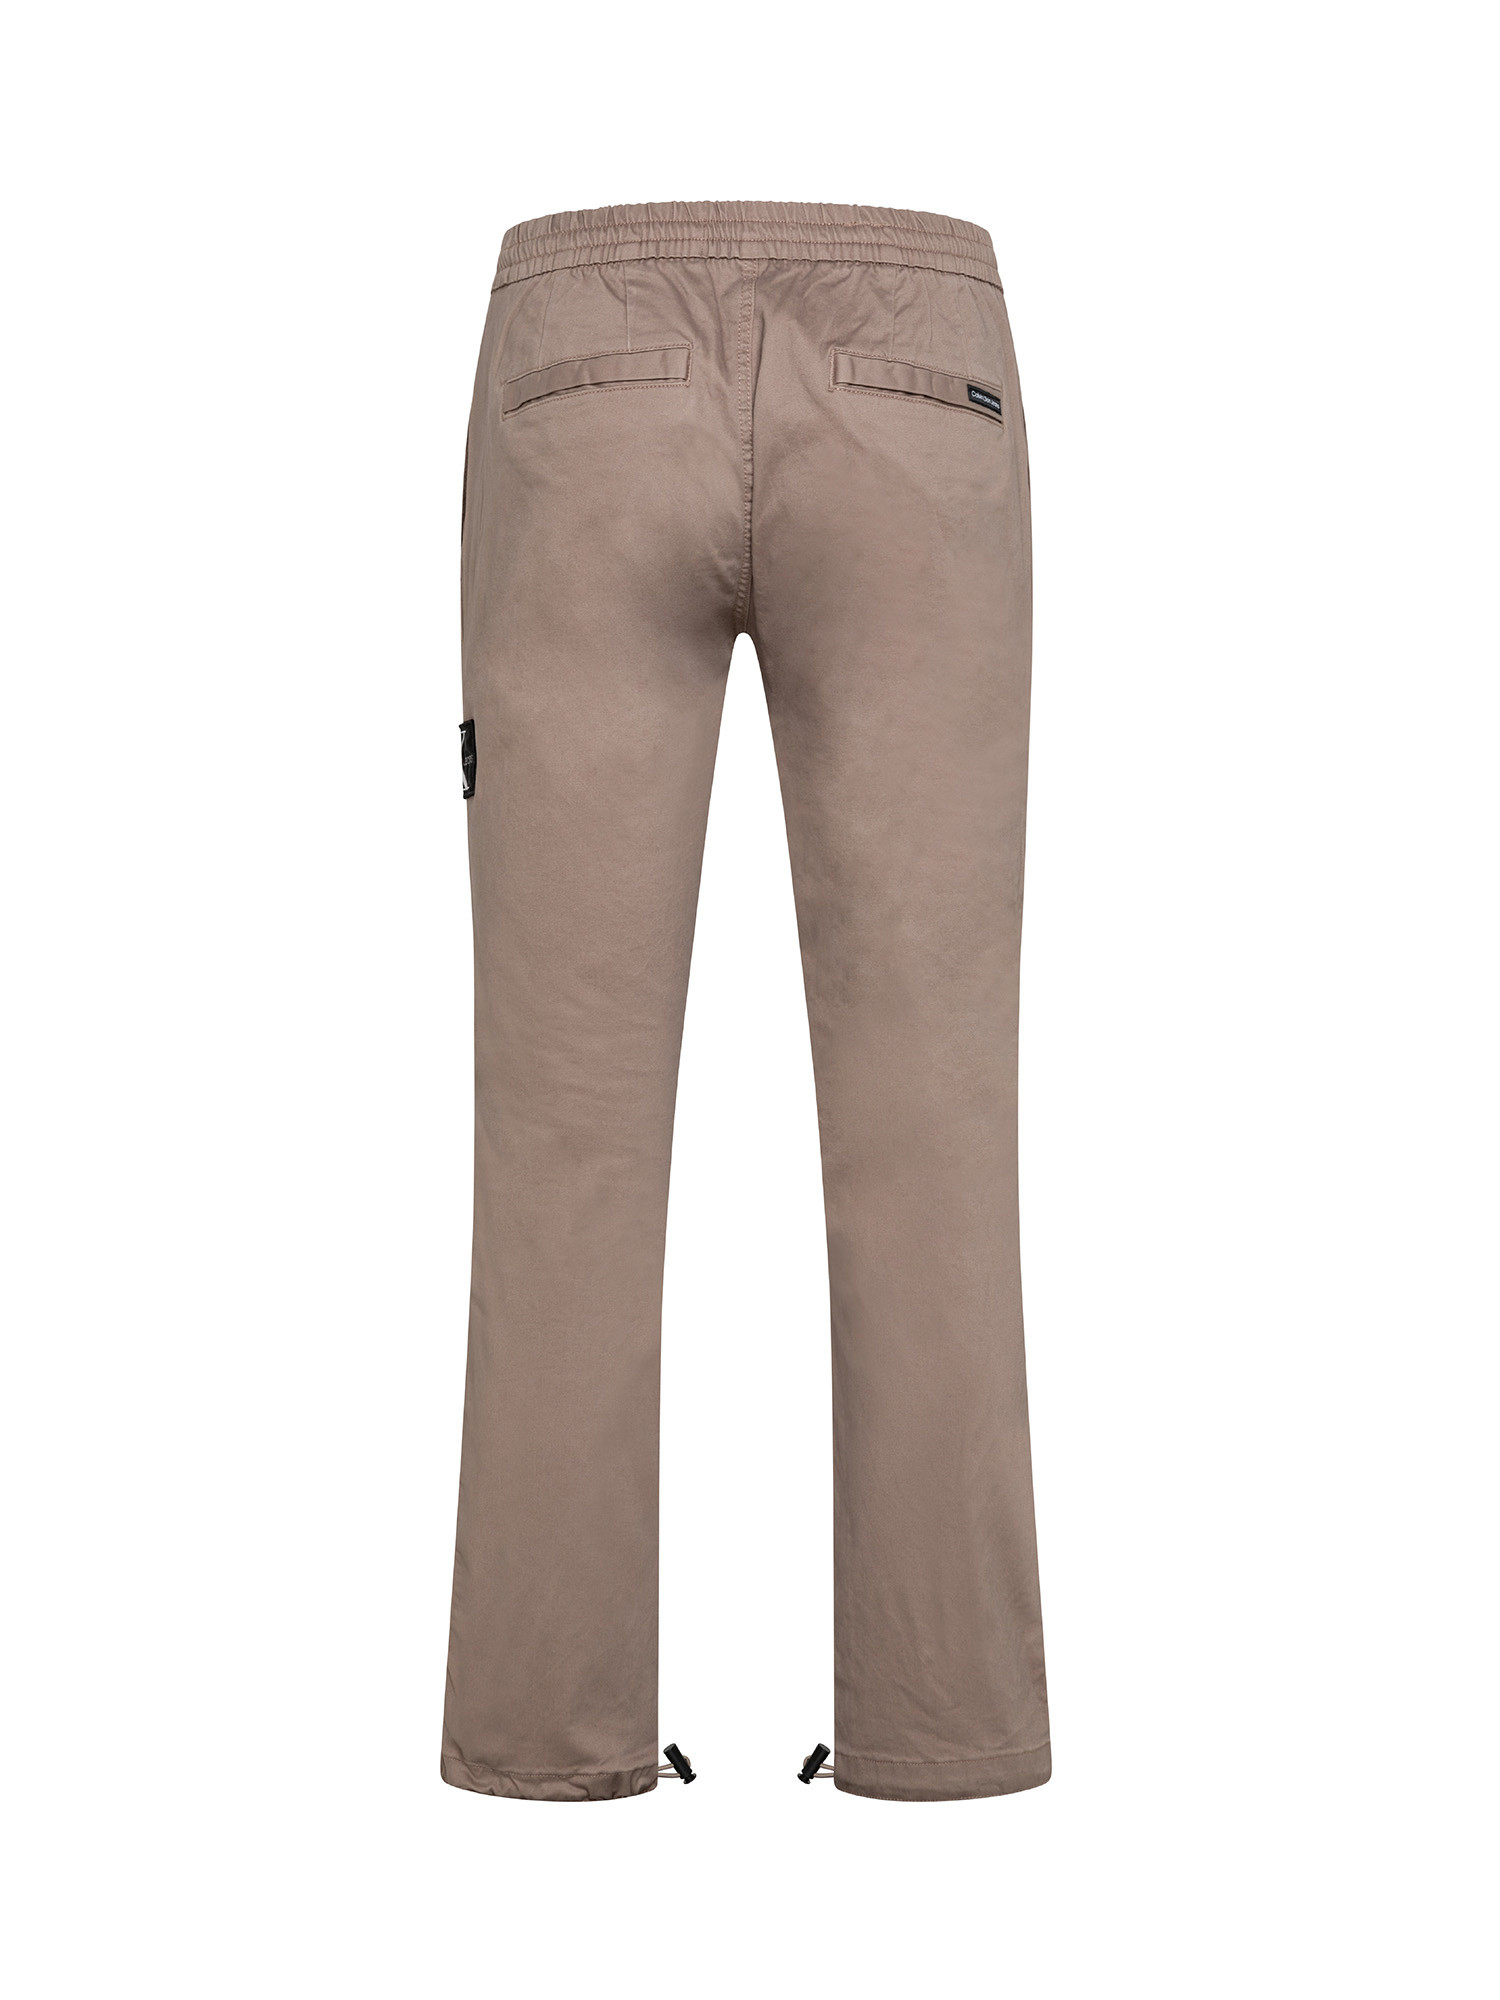 Pantaloni, Beige, large image number 1